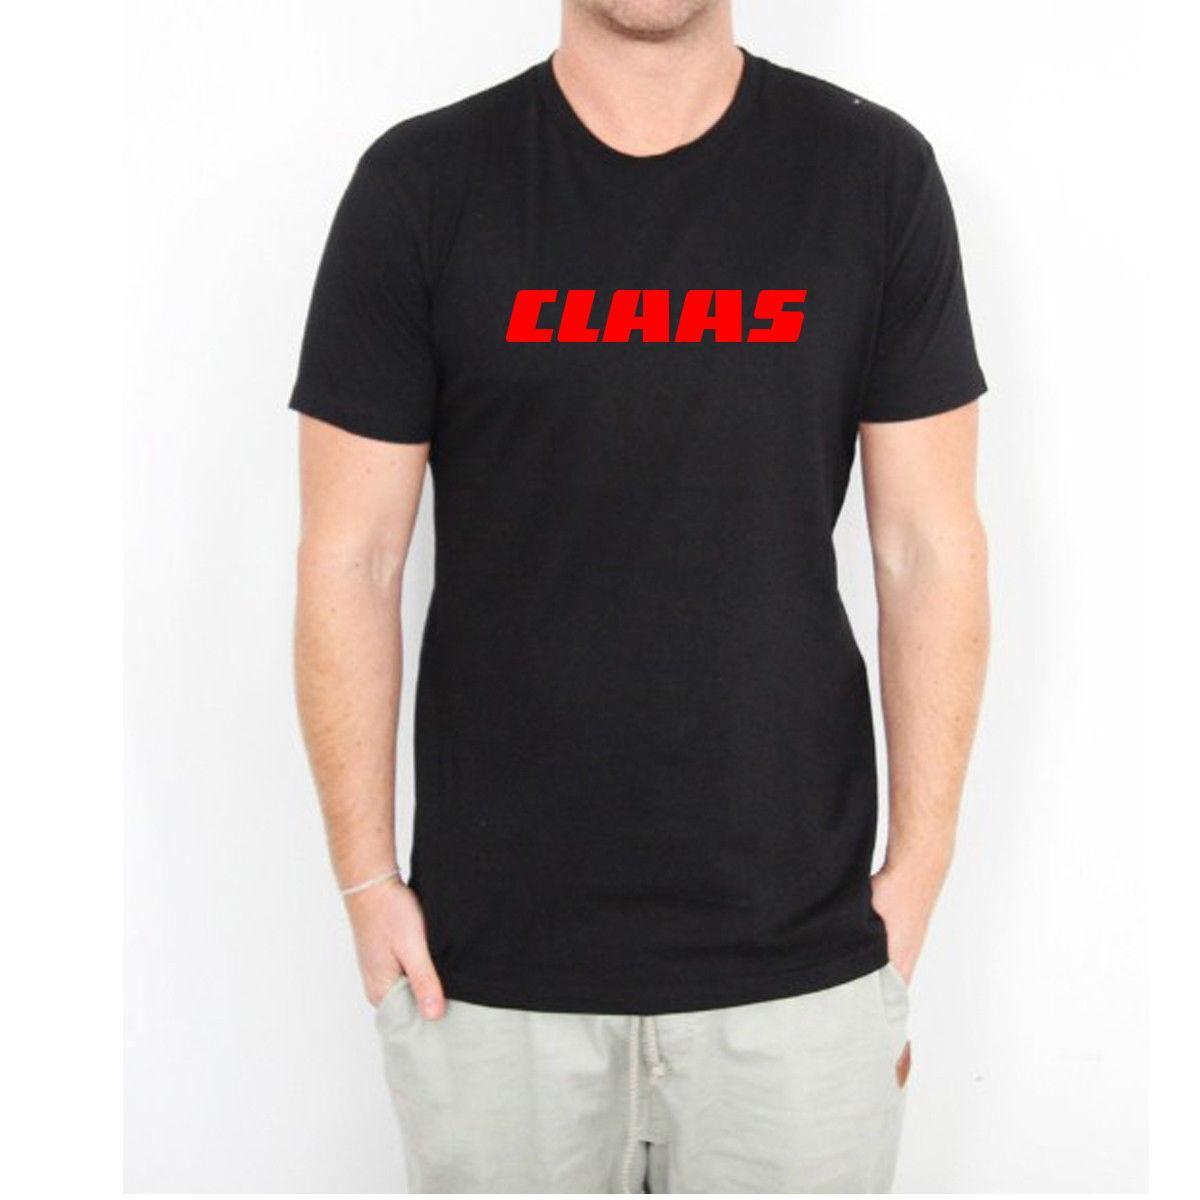 Claas Logo - CLAAS LOGO BRAND MACHINE Men Black T Shirt 100% Cotton Personalized ...